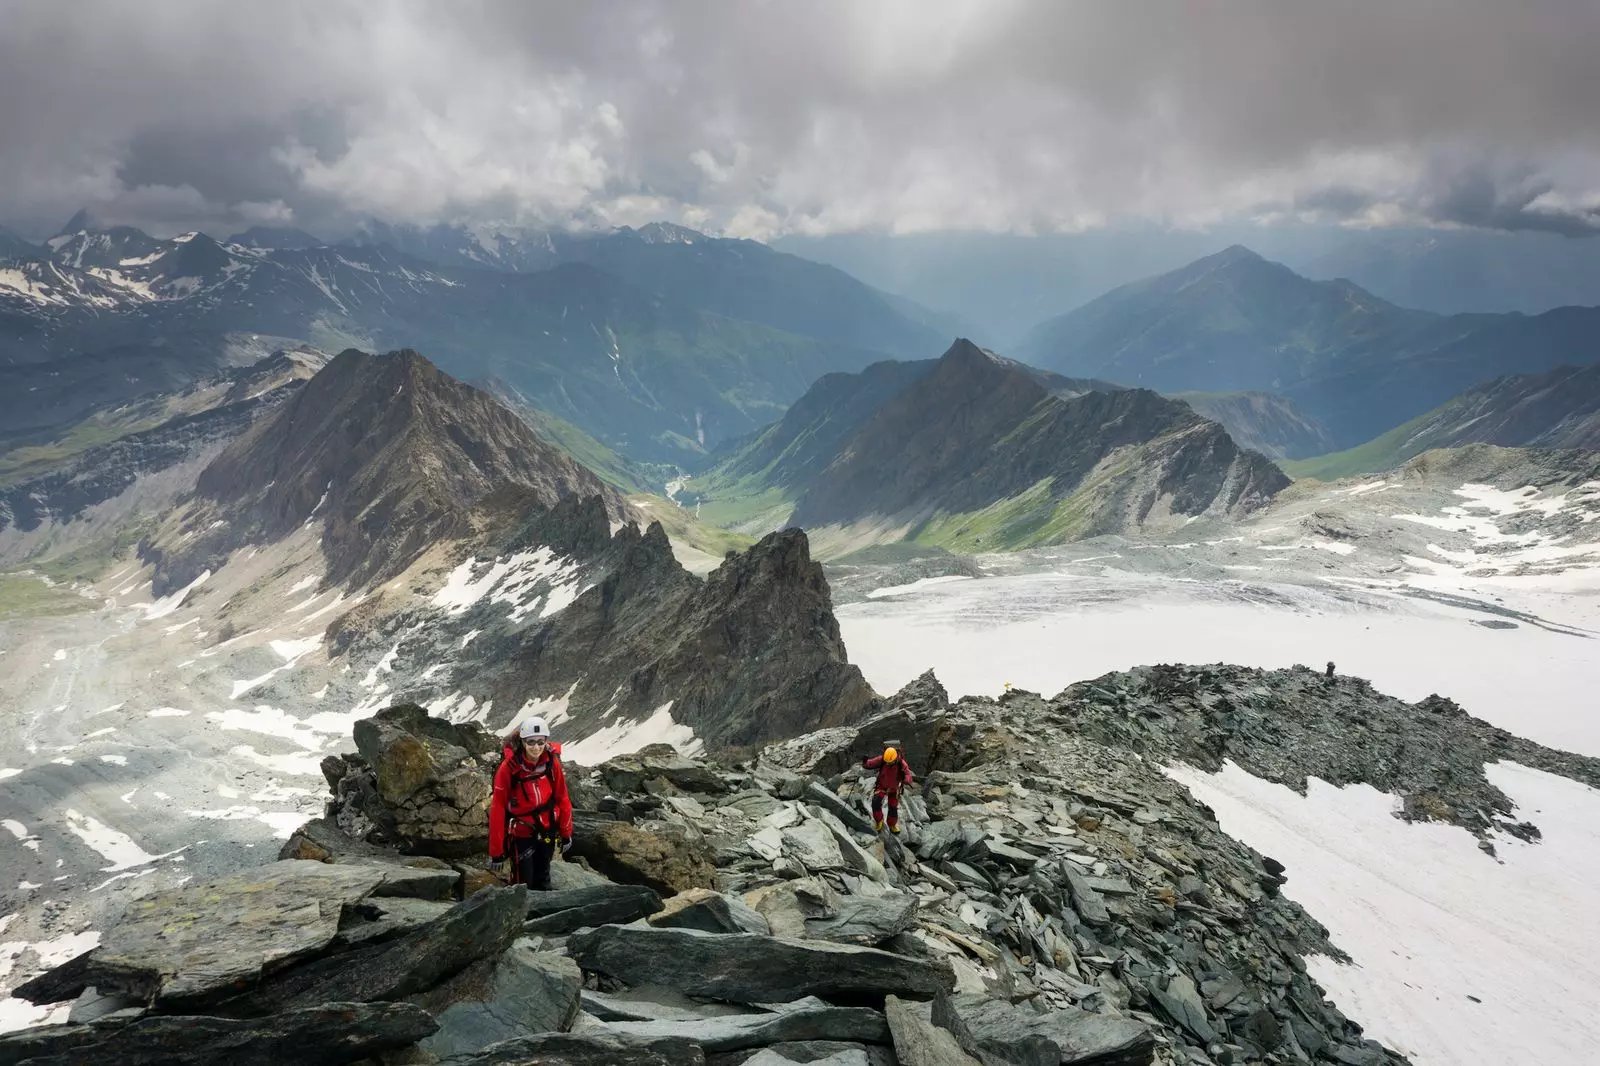 Grossglockner (3798 m) Austria - Climbing routes, huts ...